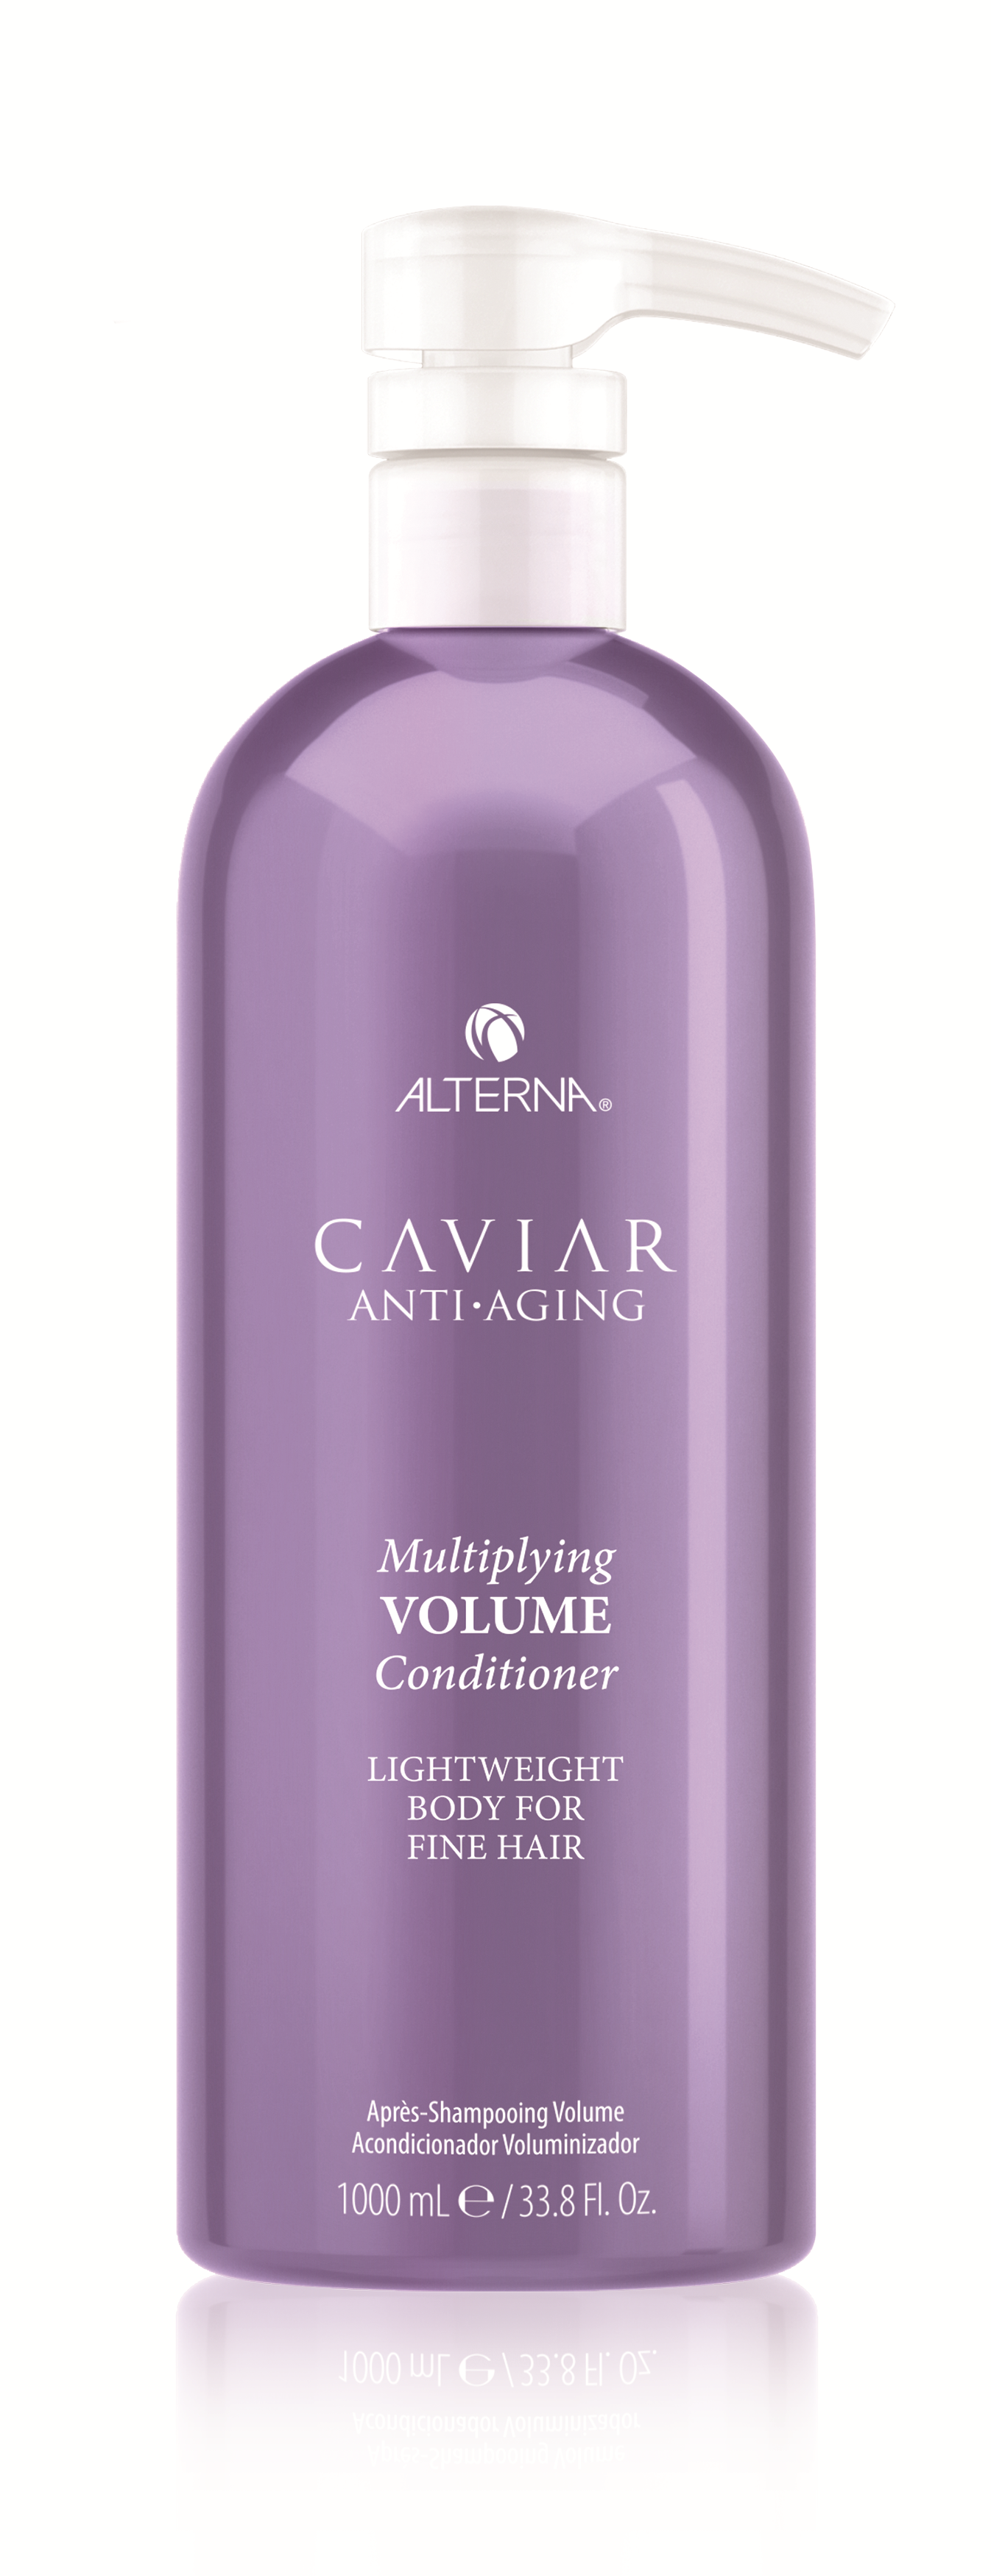 Alterna Caviar Anti-Aging Multiplying Volume Conditioner 1000 ml